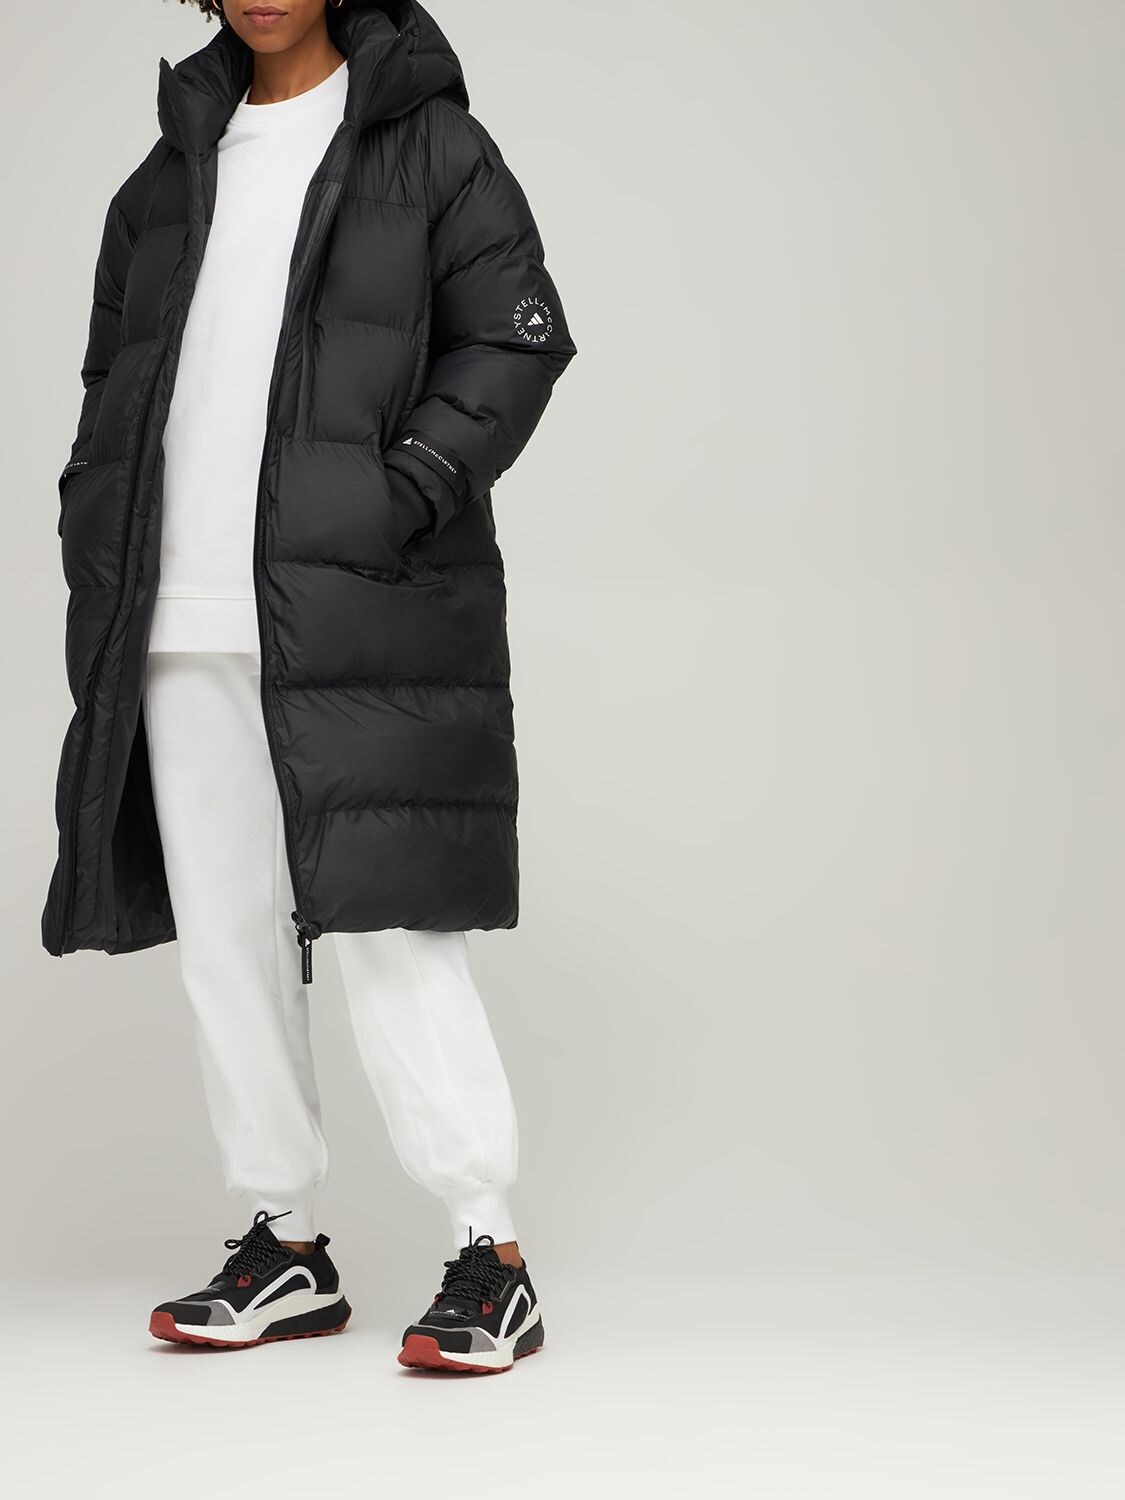 Adidas X Stella McCartney Asmc Outdoor Boost 2.0 Sneakers